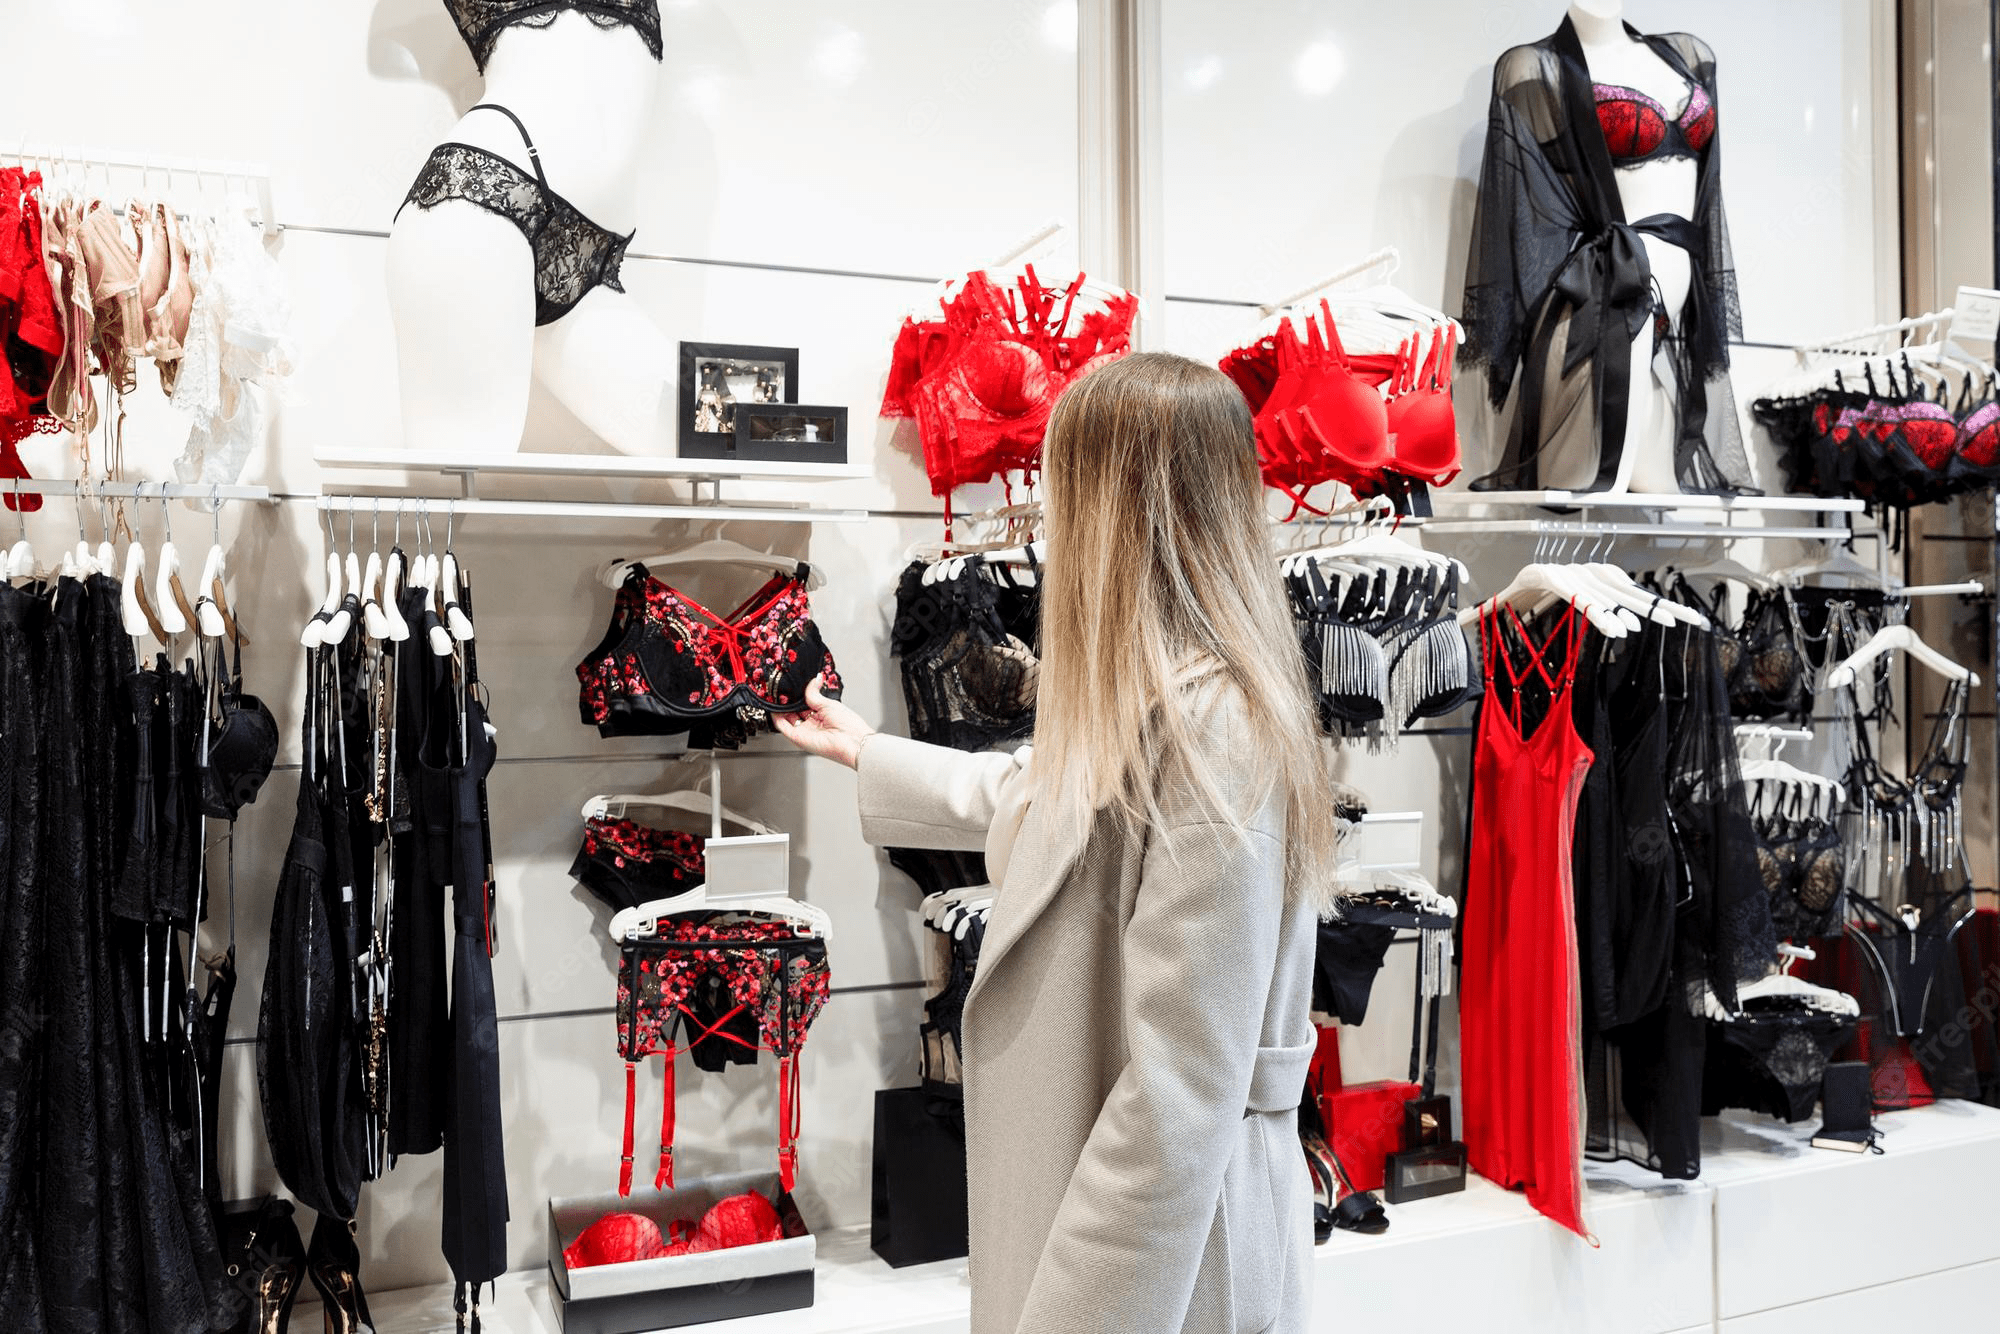 La Senza Womens Innerwear - Get Best Price from Manufacturers